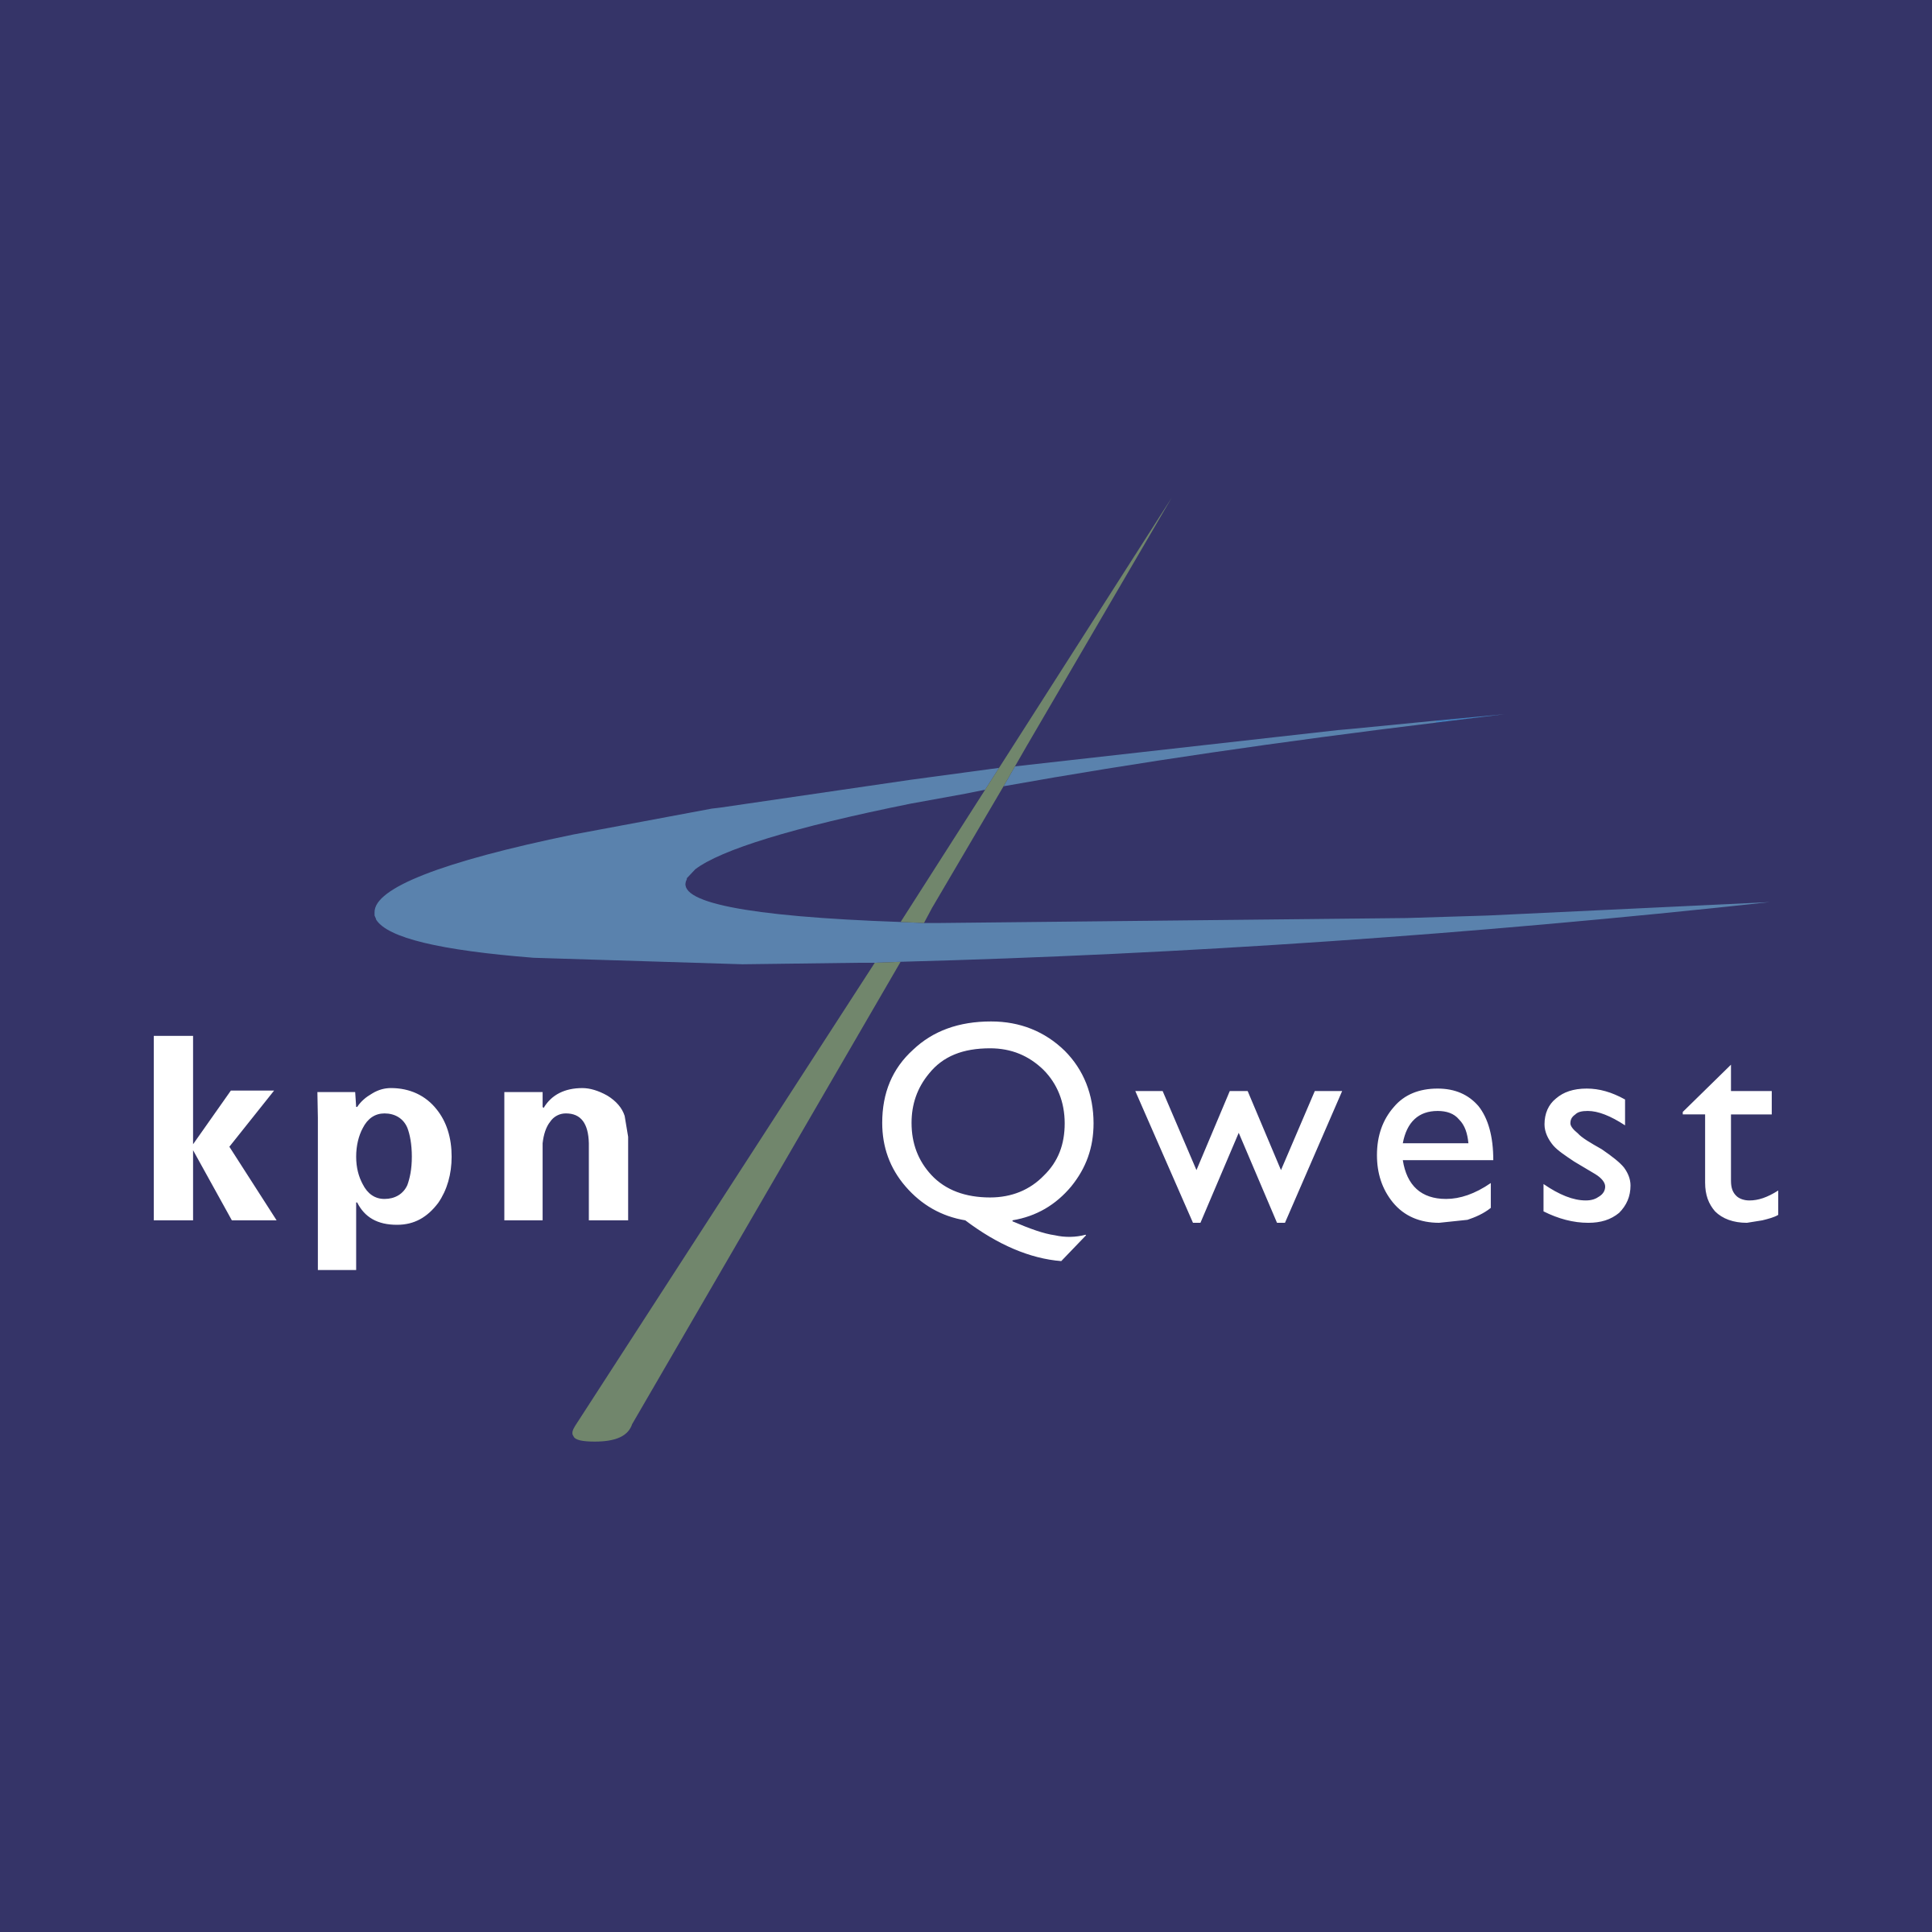 Qwest Logo - KPN Qwest Logo PNG Transparent & SVG Vector - Freebie Supply